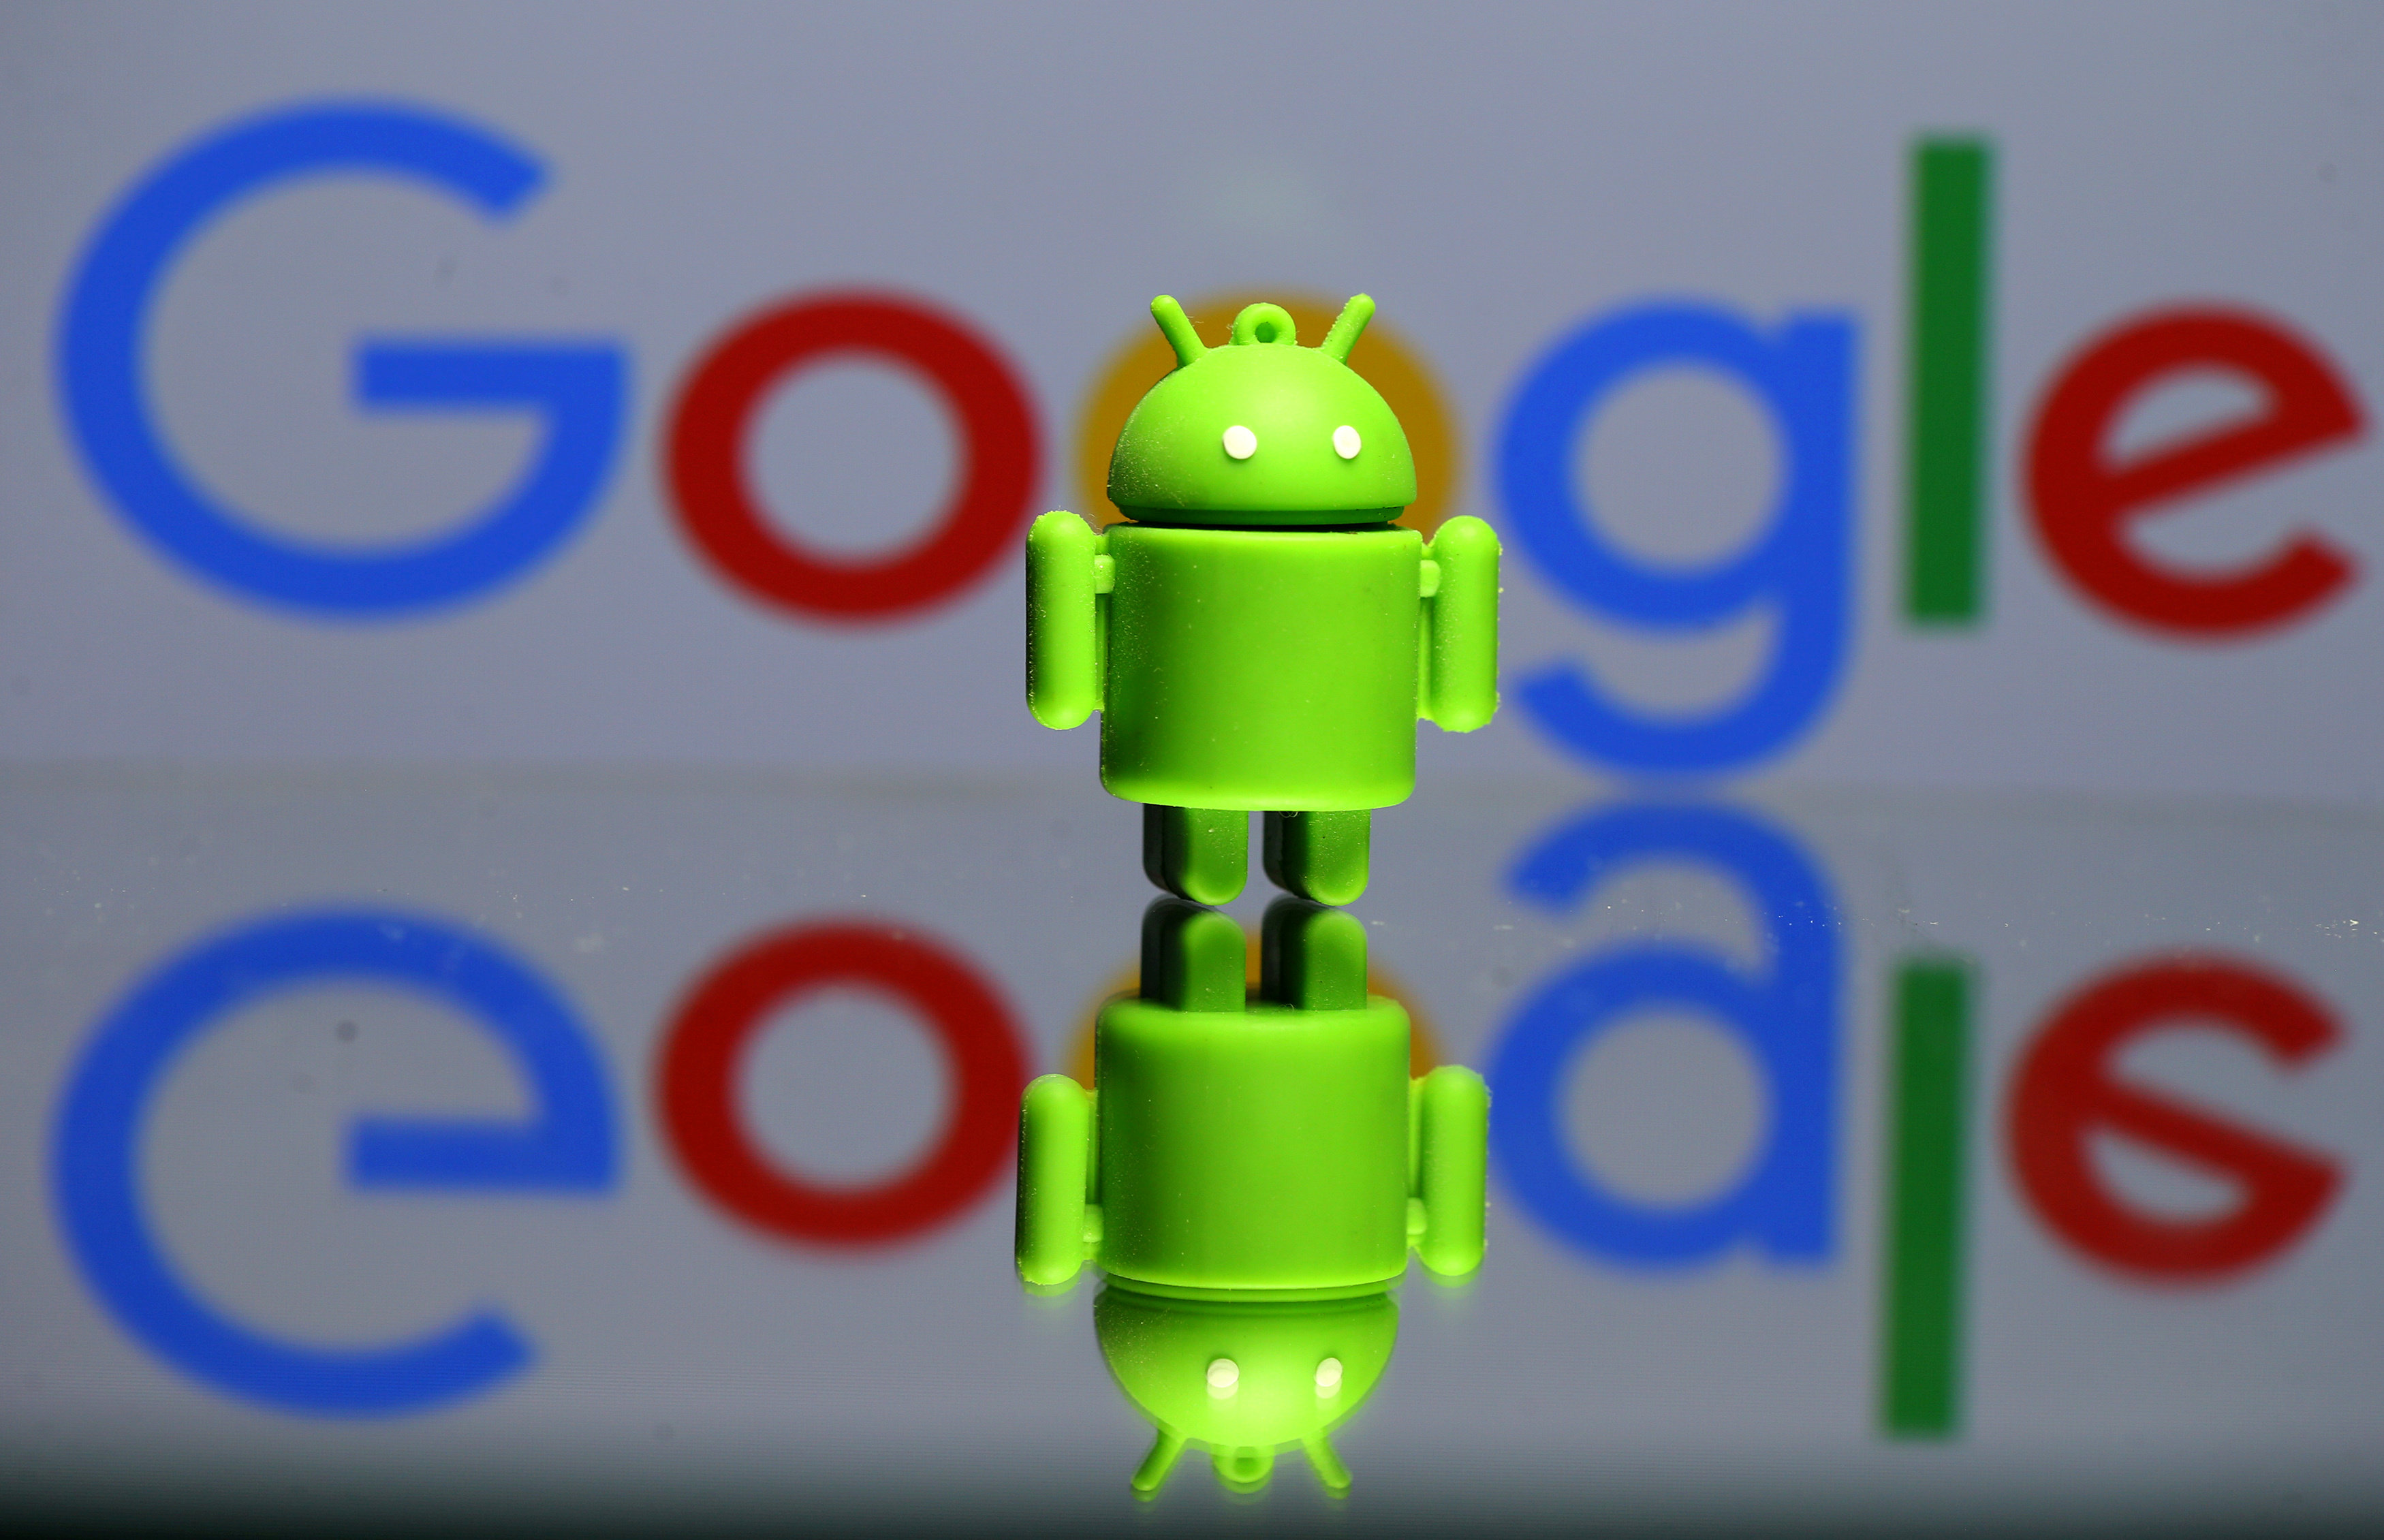 Google hit with record $5 billion EU antitrust fine